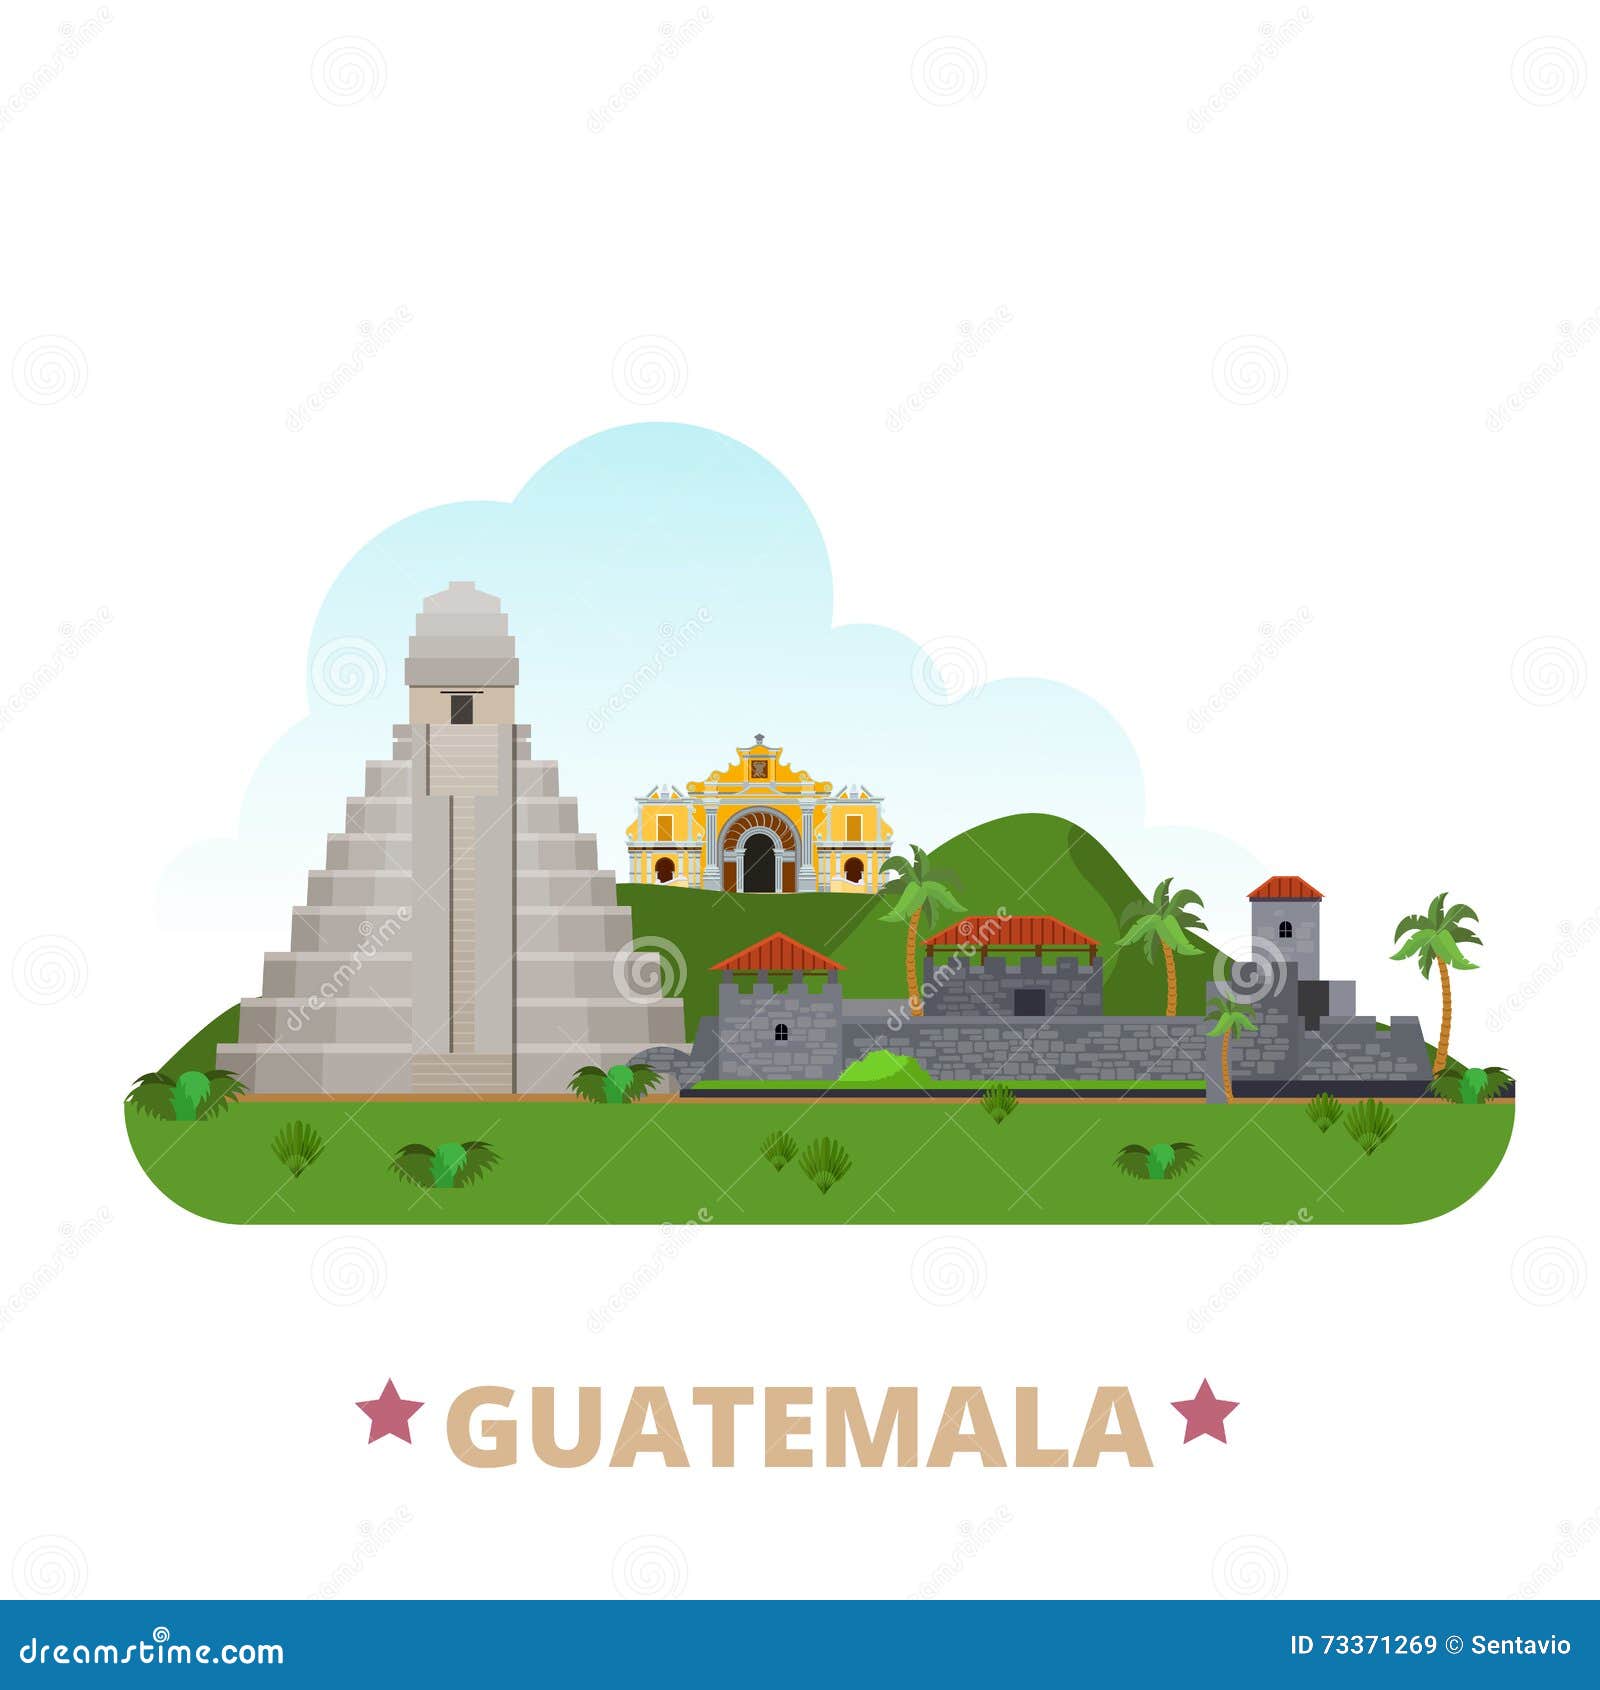 guatemala country  template flat cartoon sty